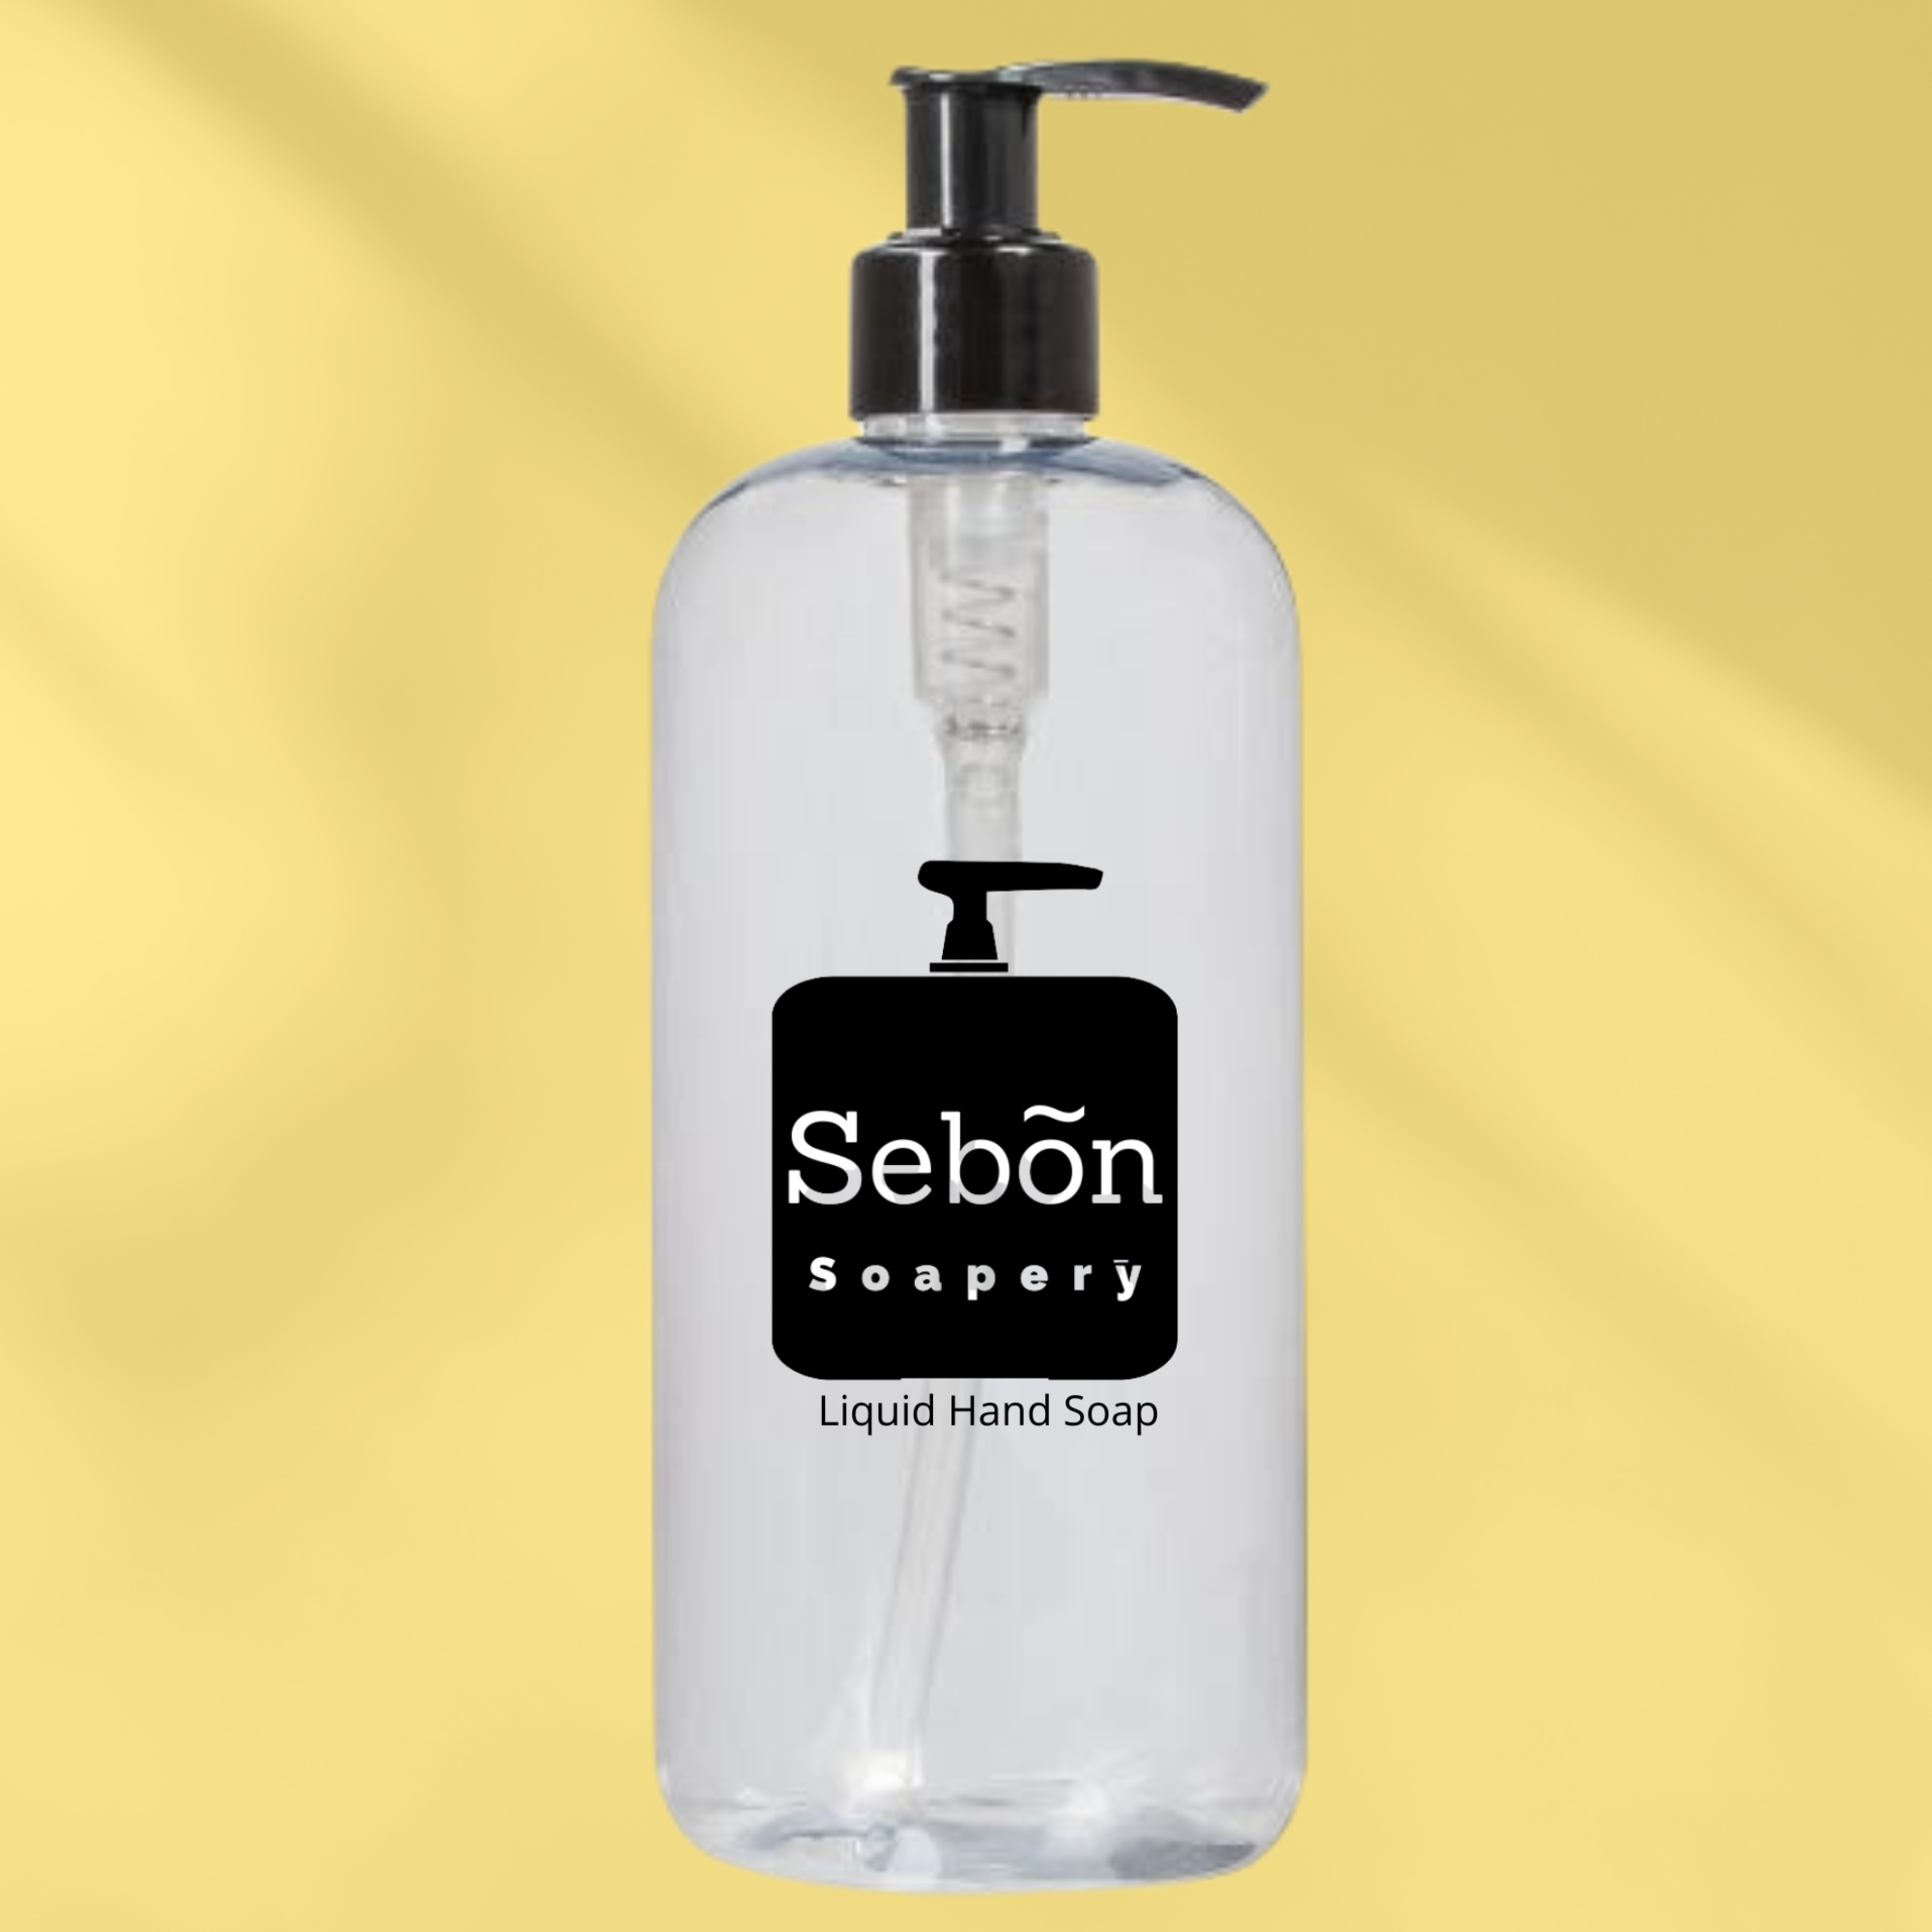 Sebon Daisy Mountain Scented Liquid Hand Soap with Olive Oil